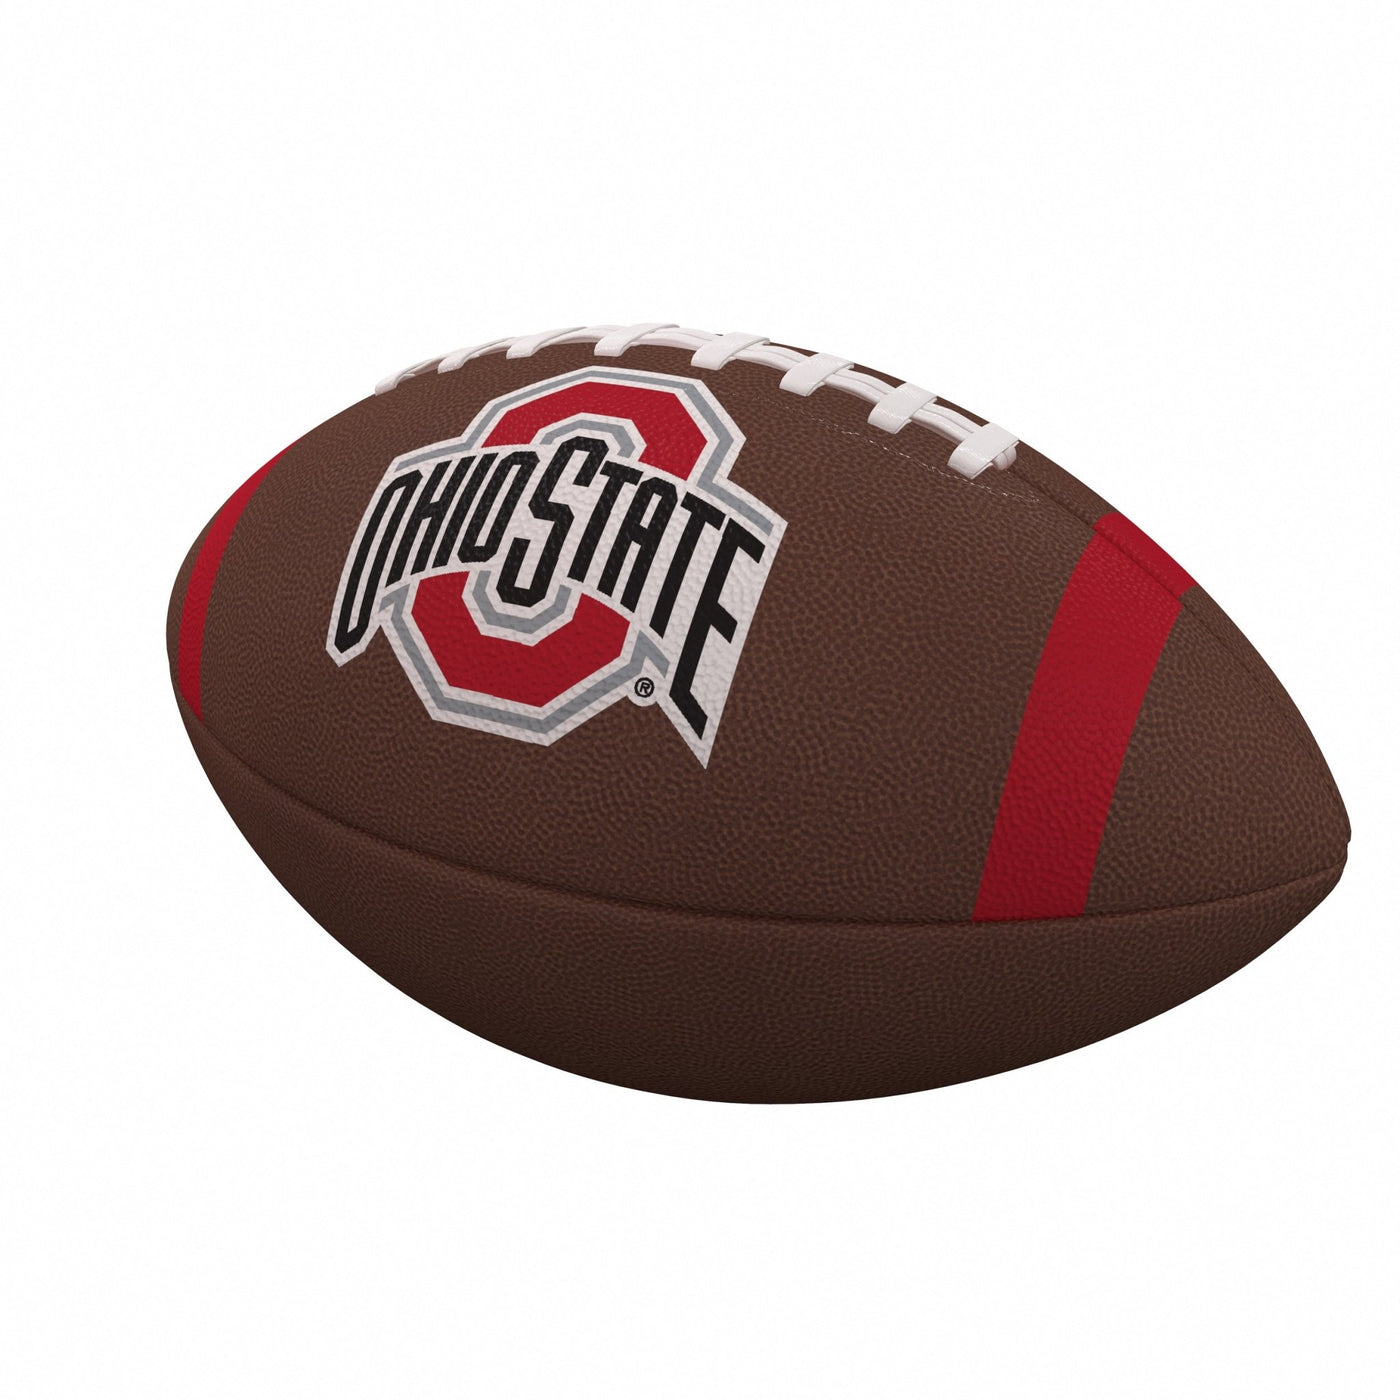 Ohio State Team Stripe Official-Size Composite Football - Logo Brands